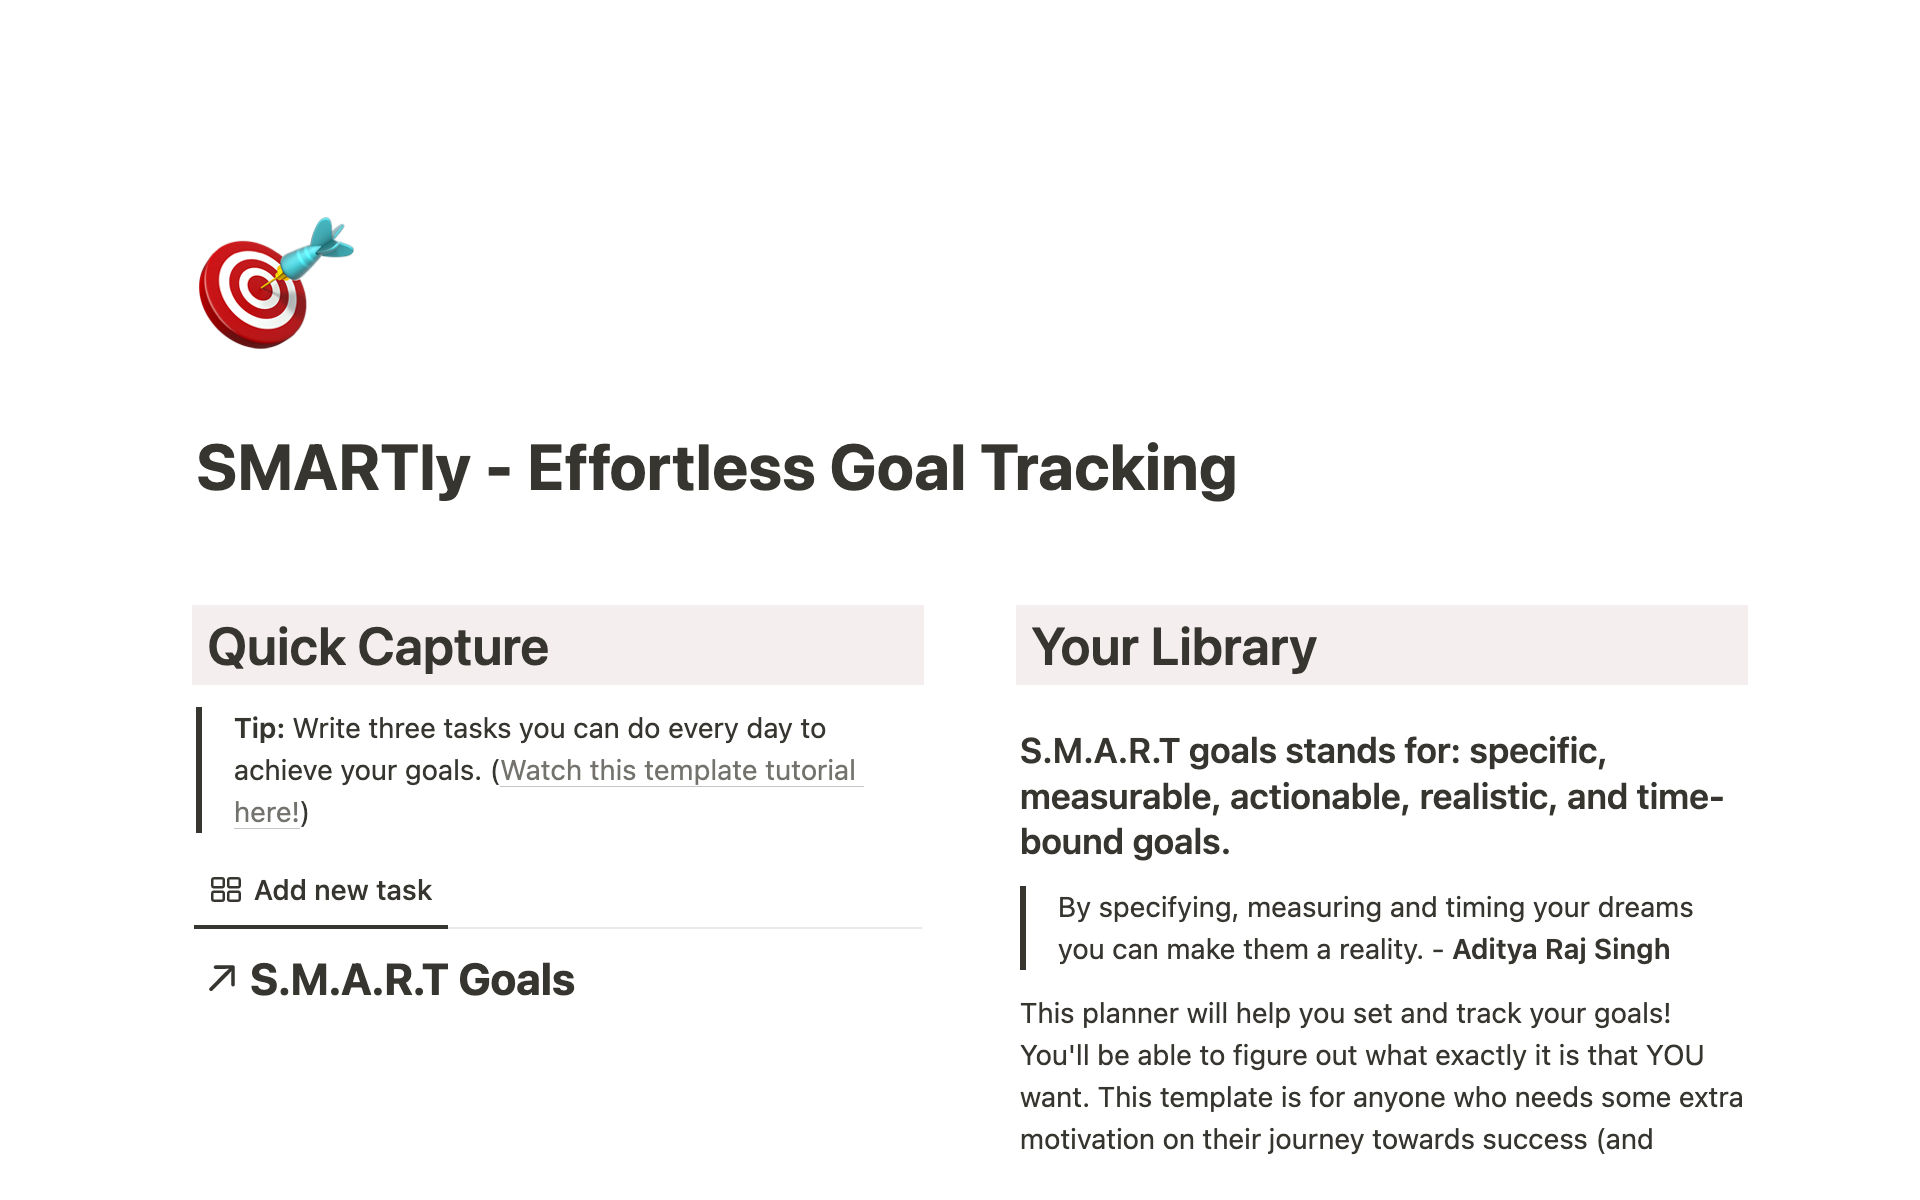 Vista previa de plantilla para SMARTly - Effortless Goal Tracking